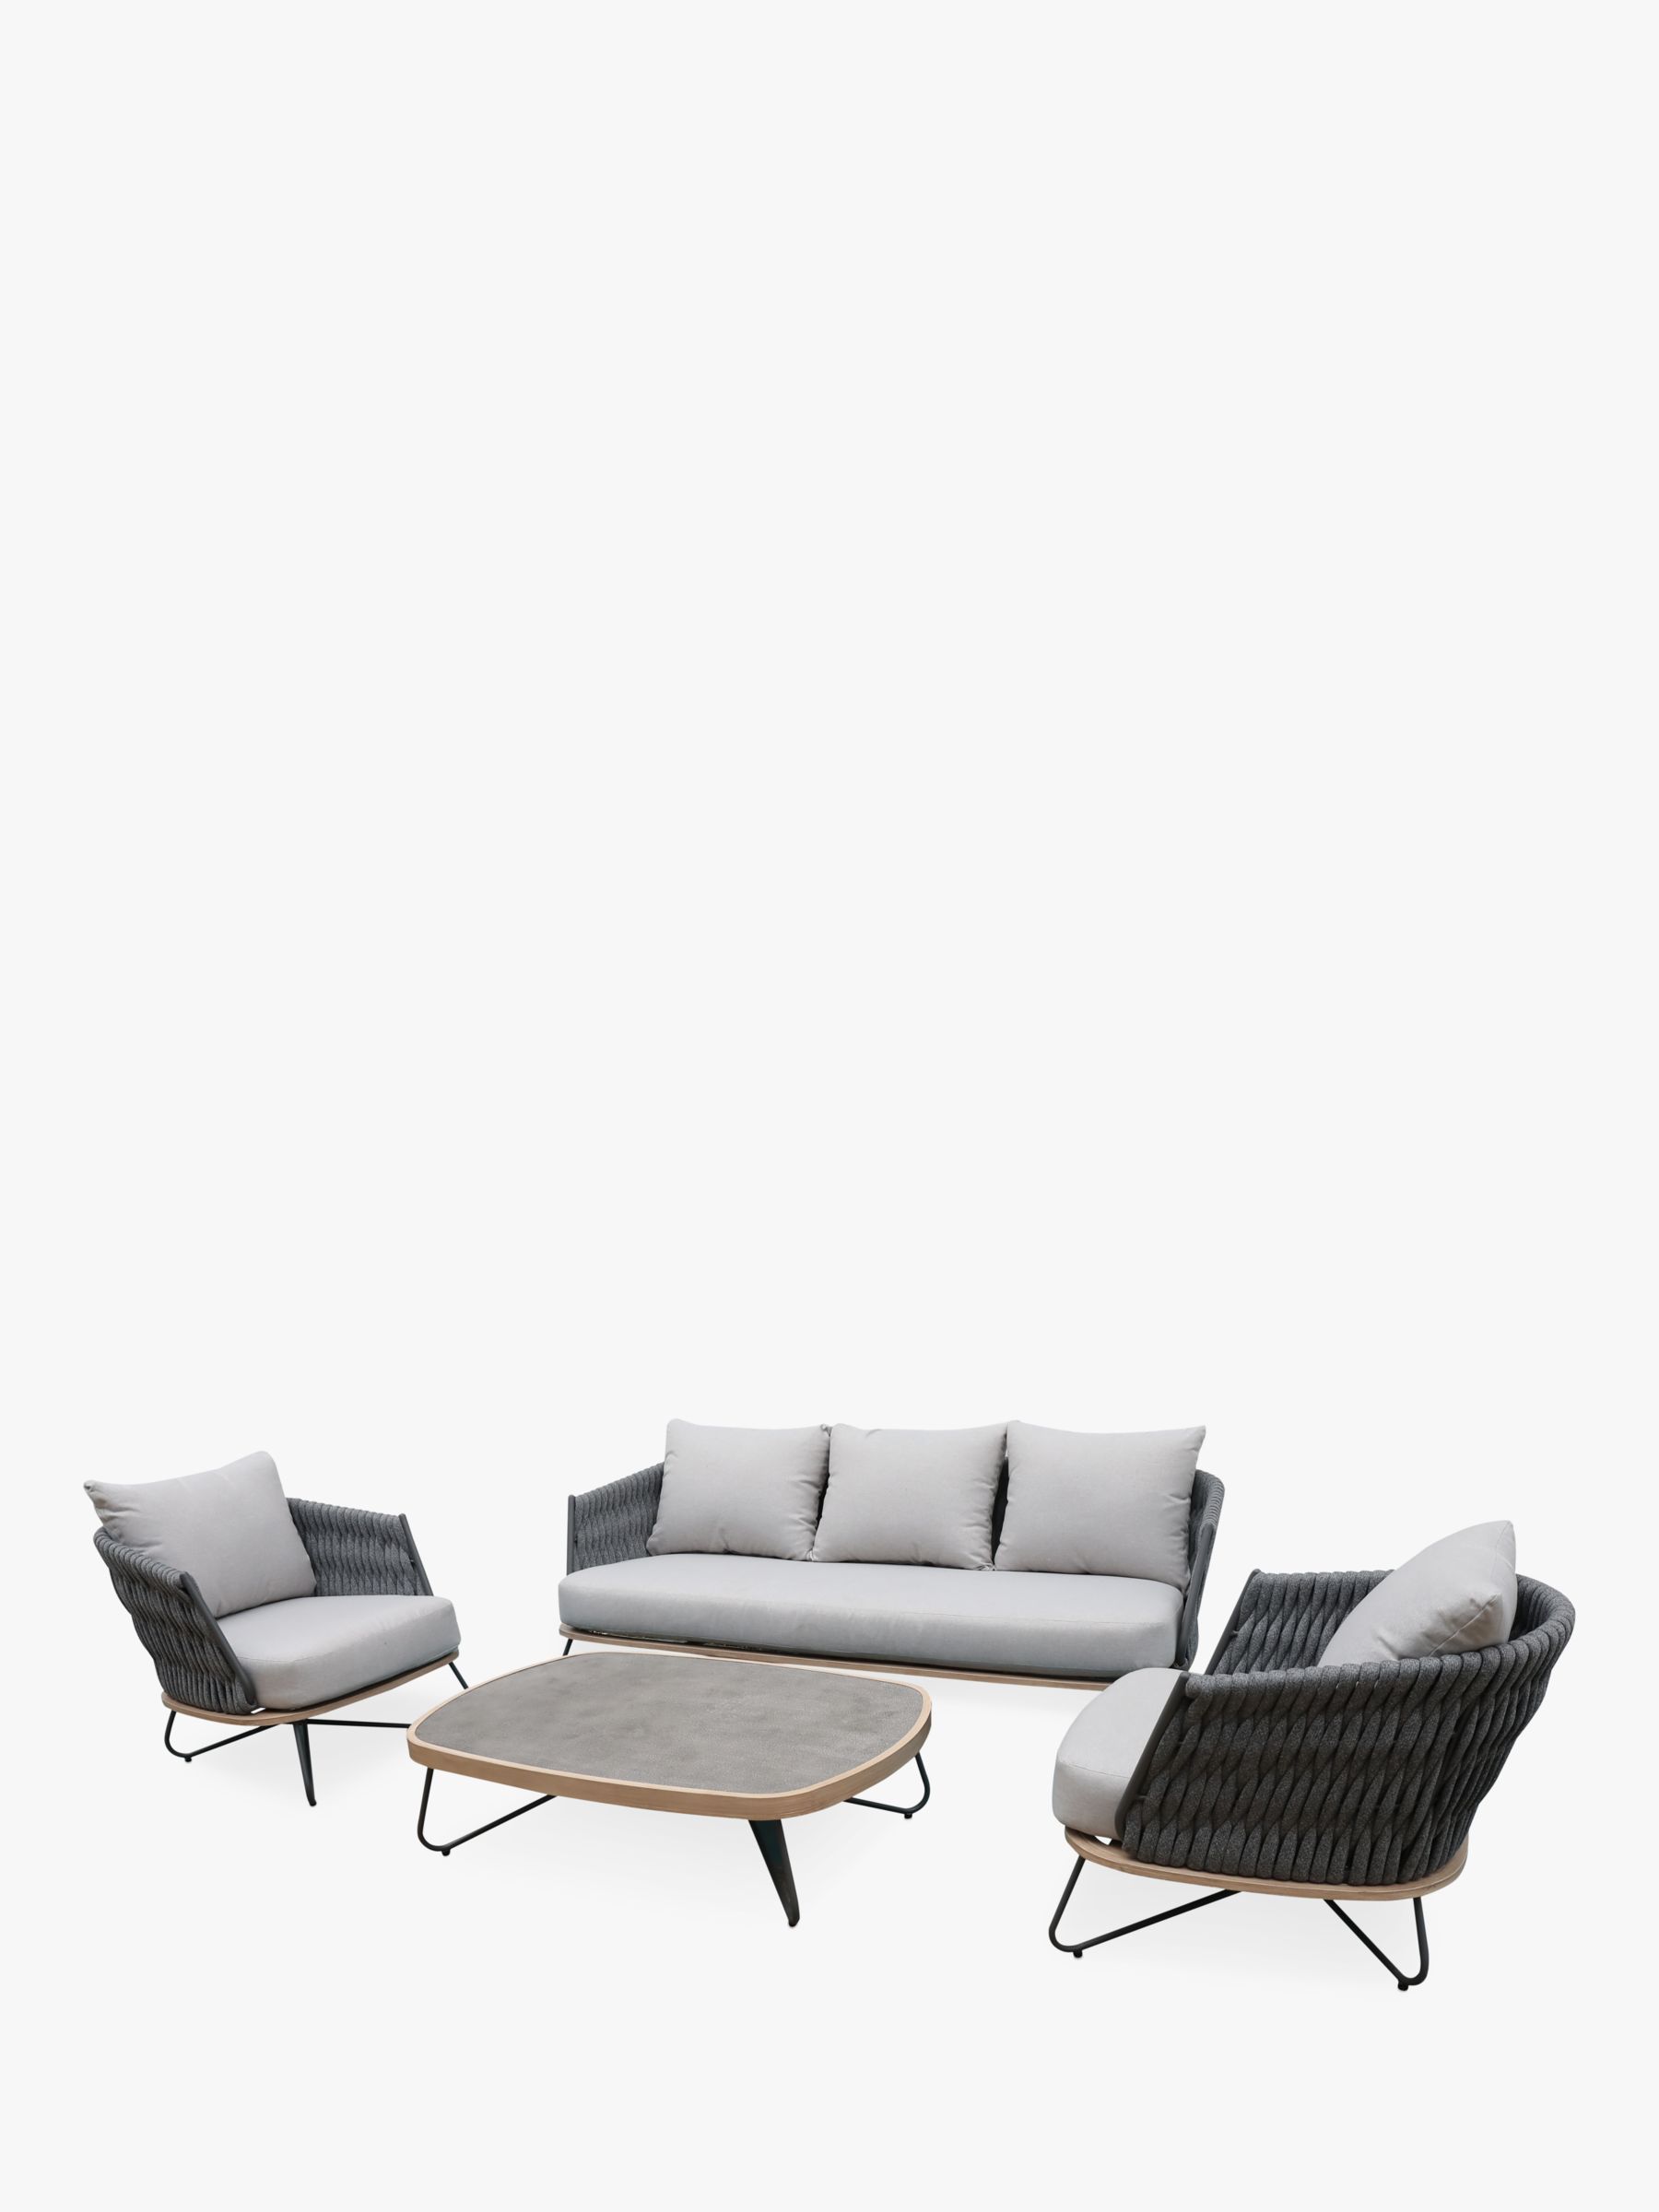 Photo of Kettler aruba garden coffee table sofa & chairs 4-seater lounging set grey